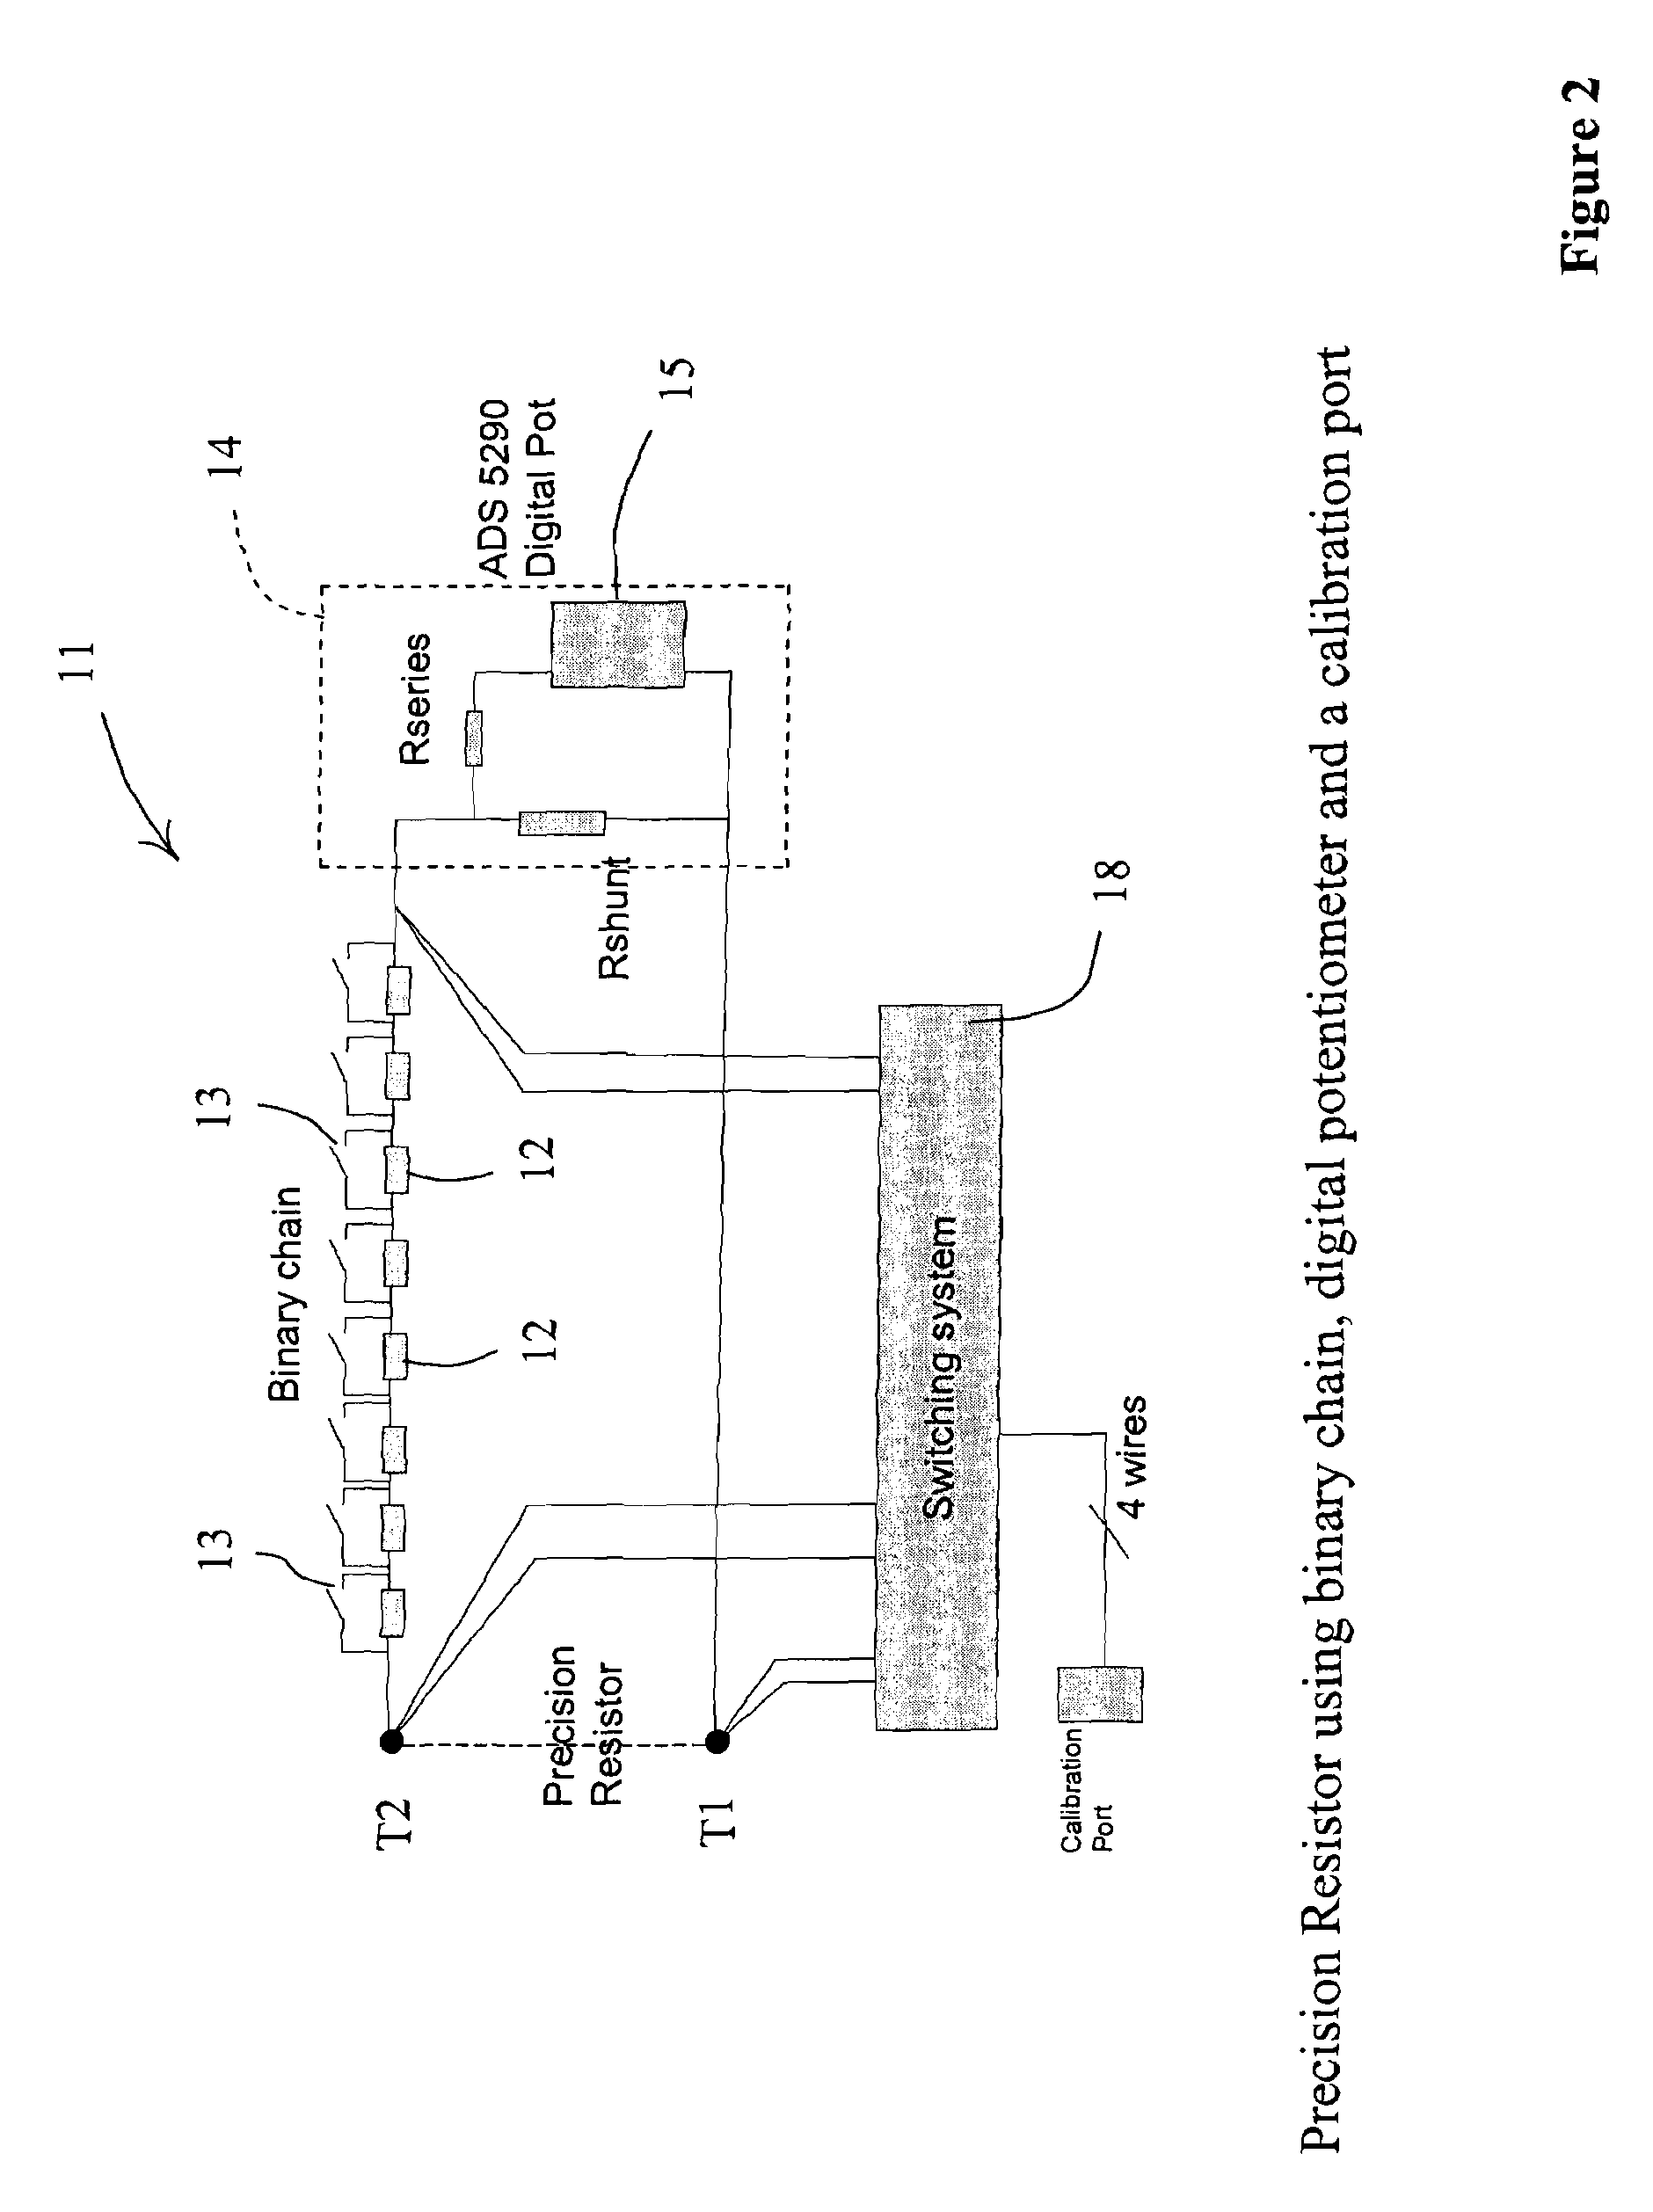 Resistor network and variable resistor simulator